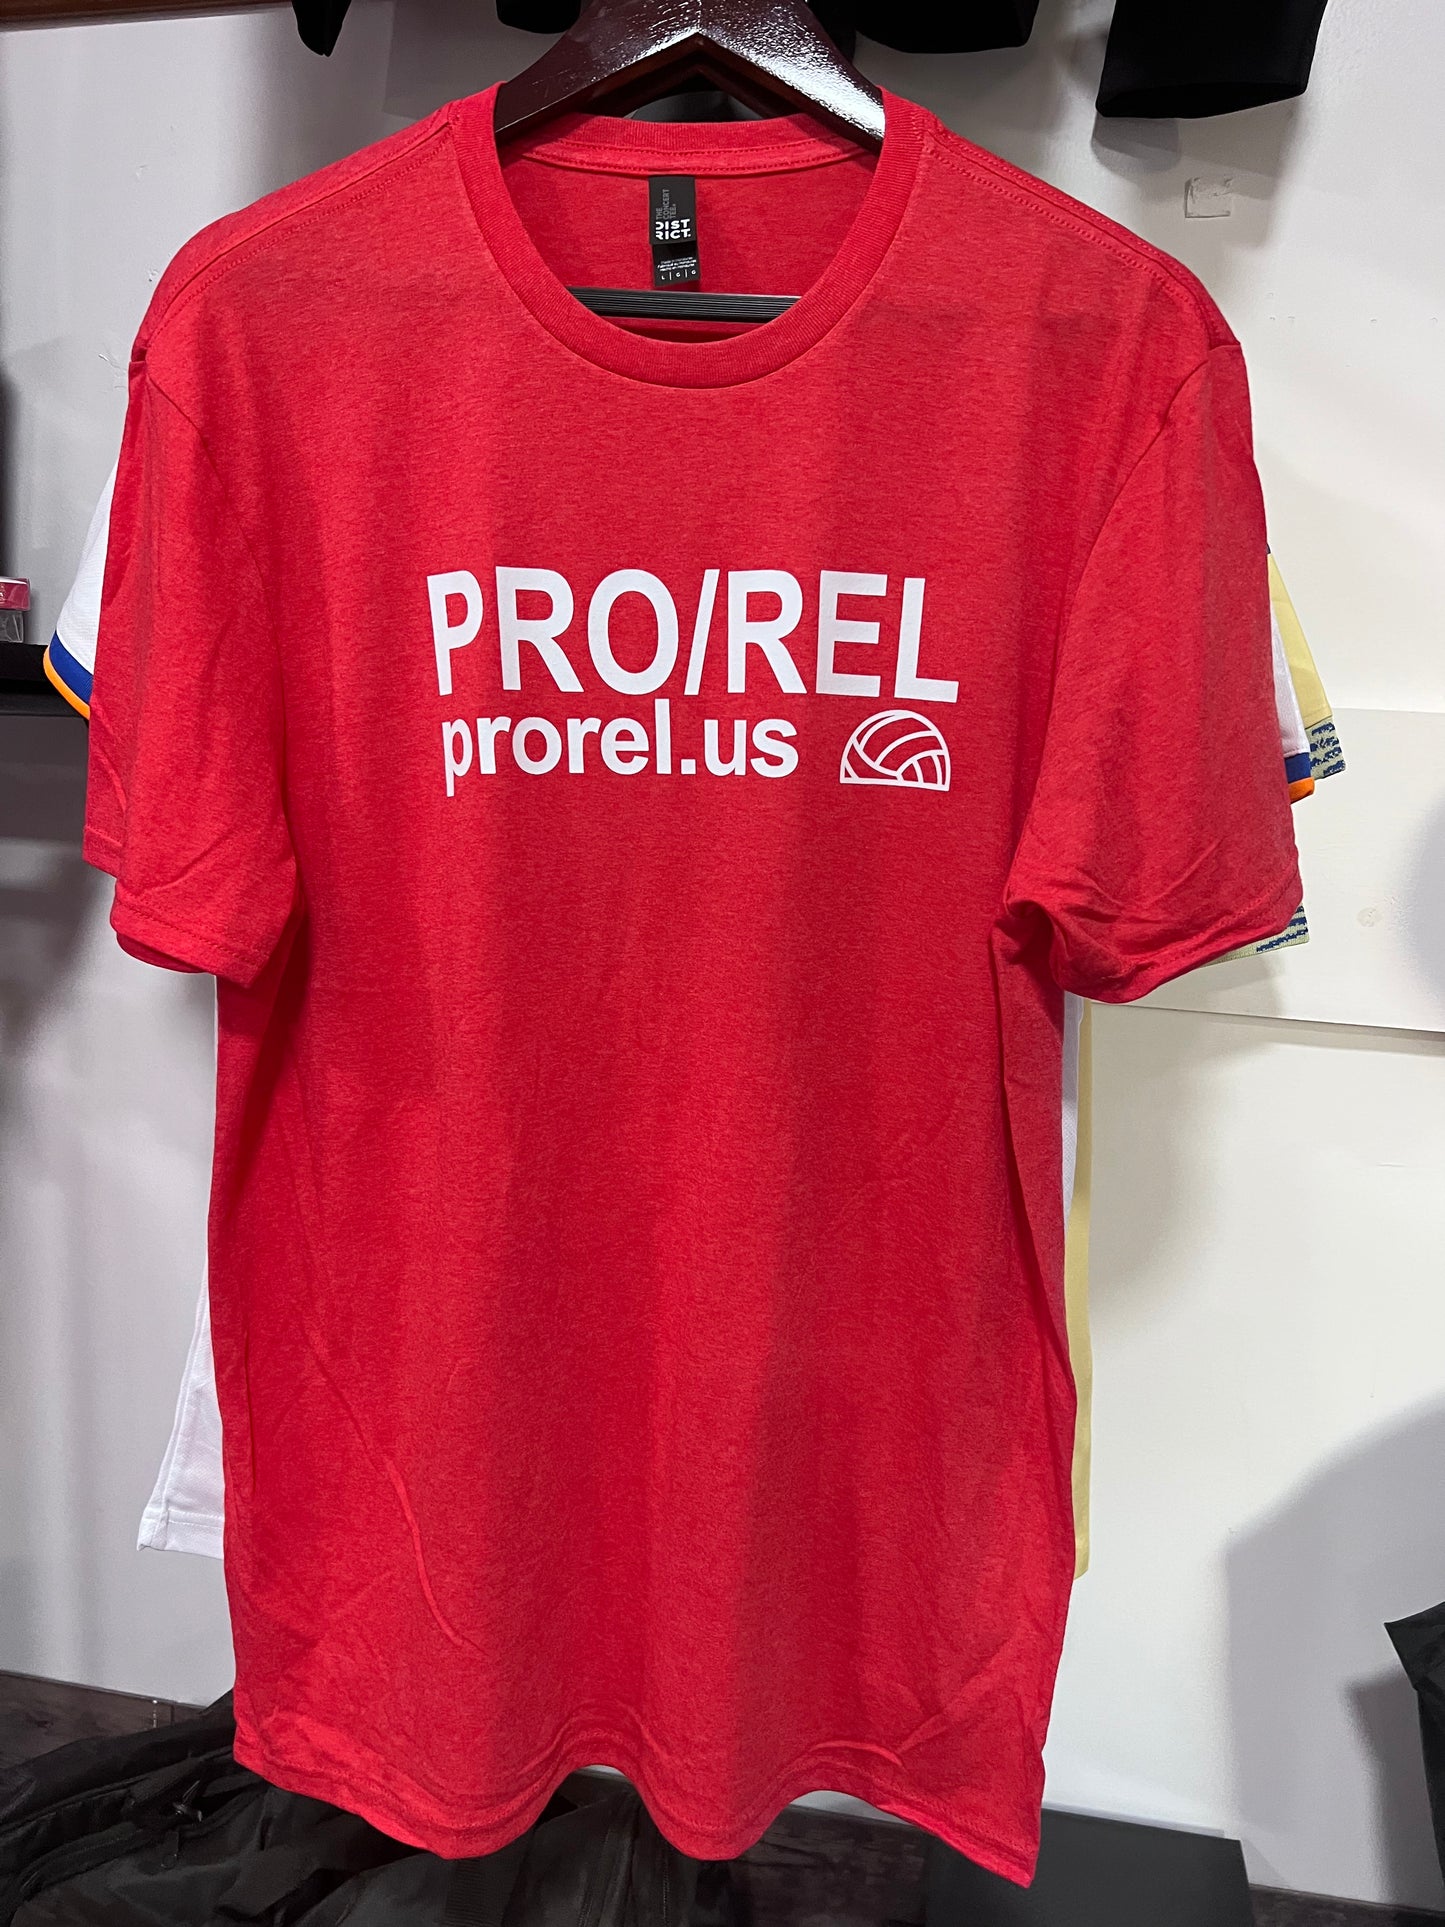 PRO/REL T-Shirt